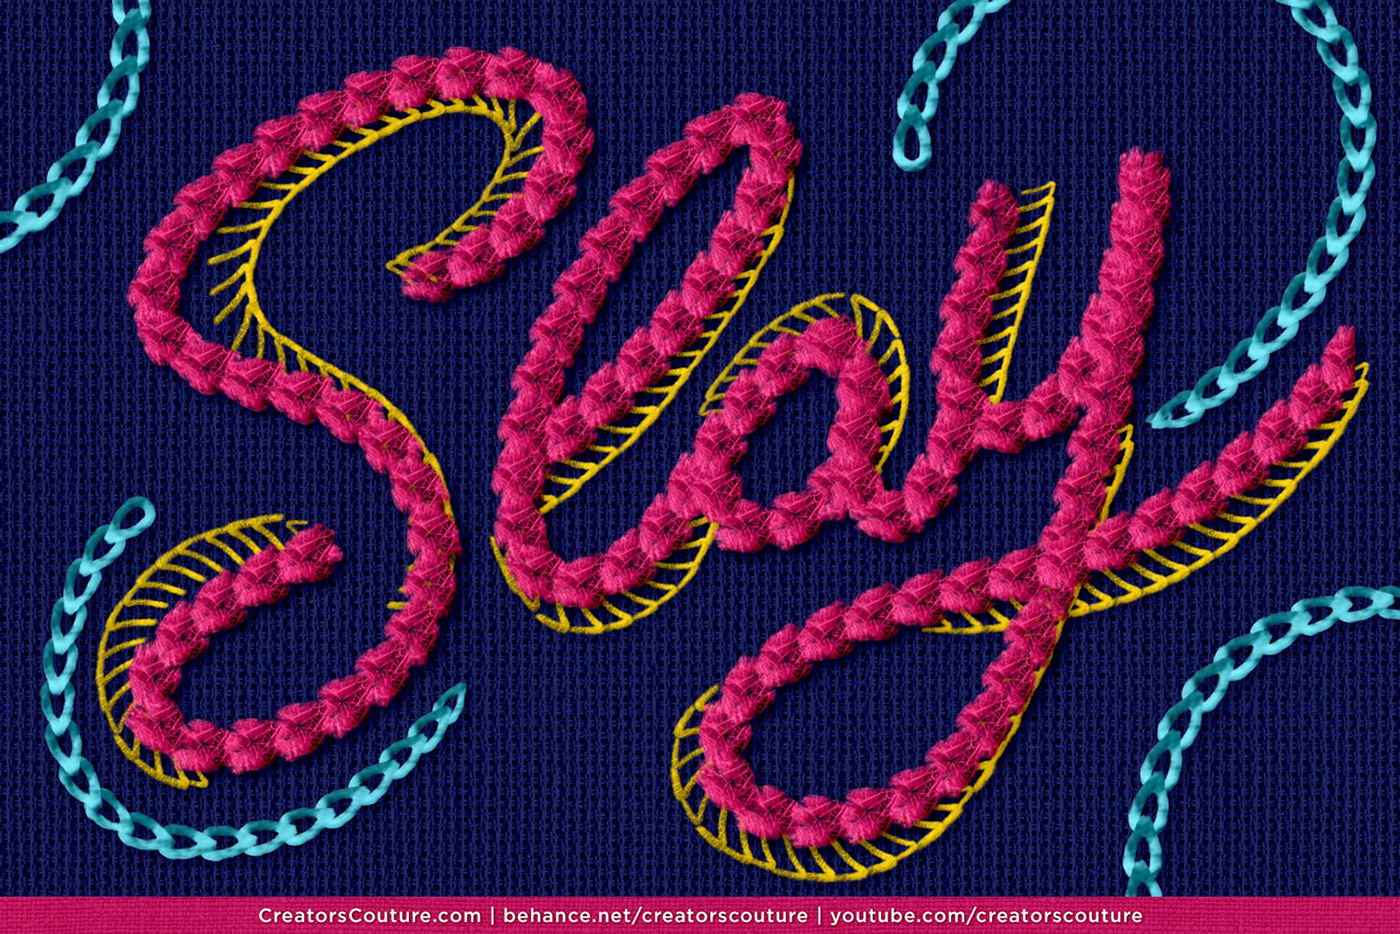 Embroidery thread surface design Surface Pattern Digital Art  ILLUSTRATION  Photoshop brush brushes brush lettering